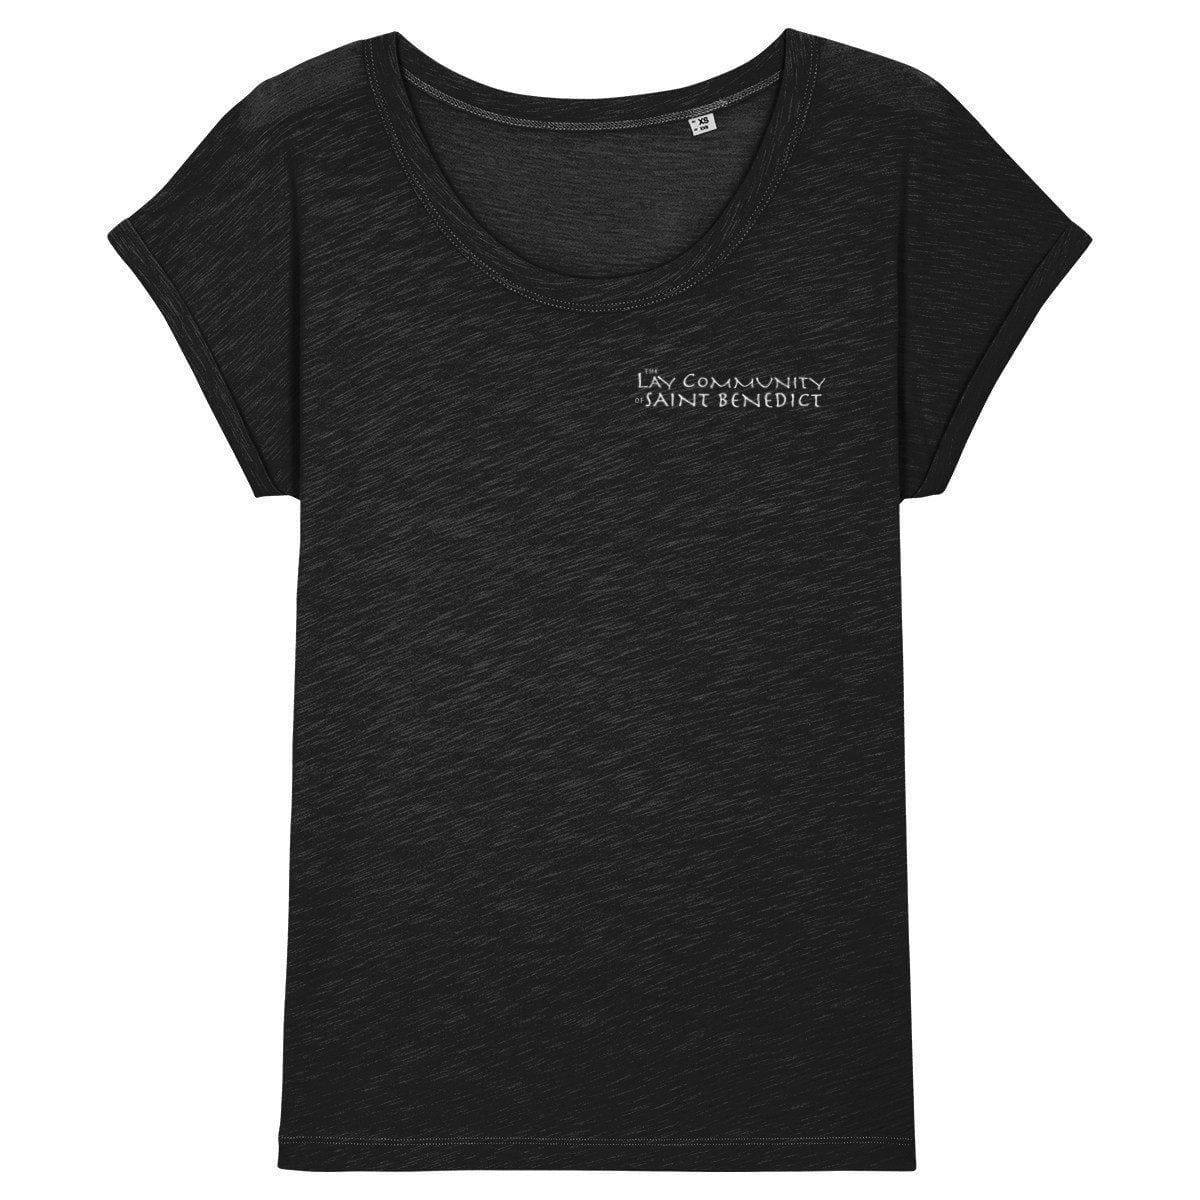 Slub Organic Cotton T-shirts - Women's T-shirt For The Lay Community Of Saint Benedict